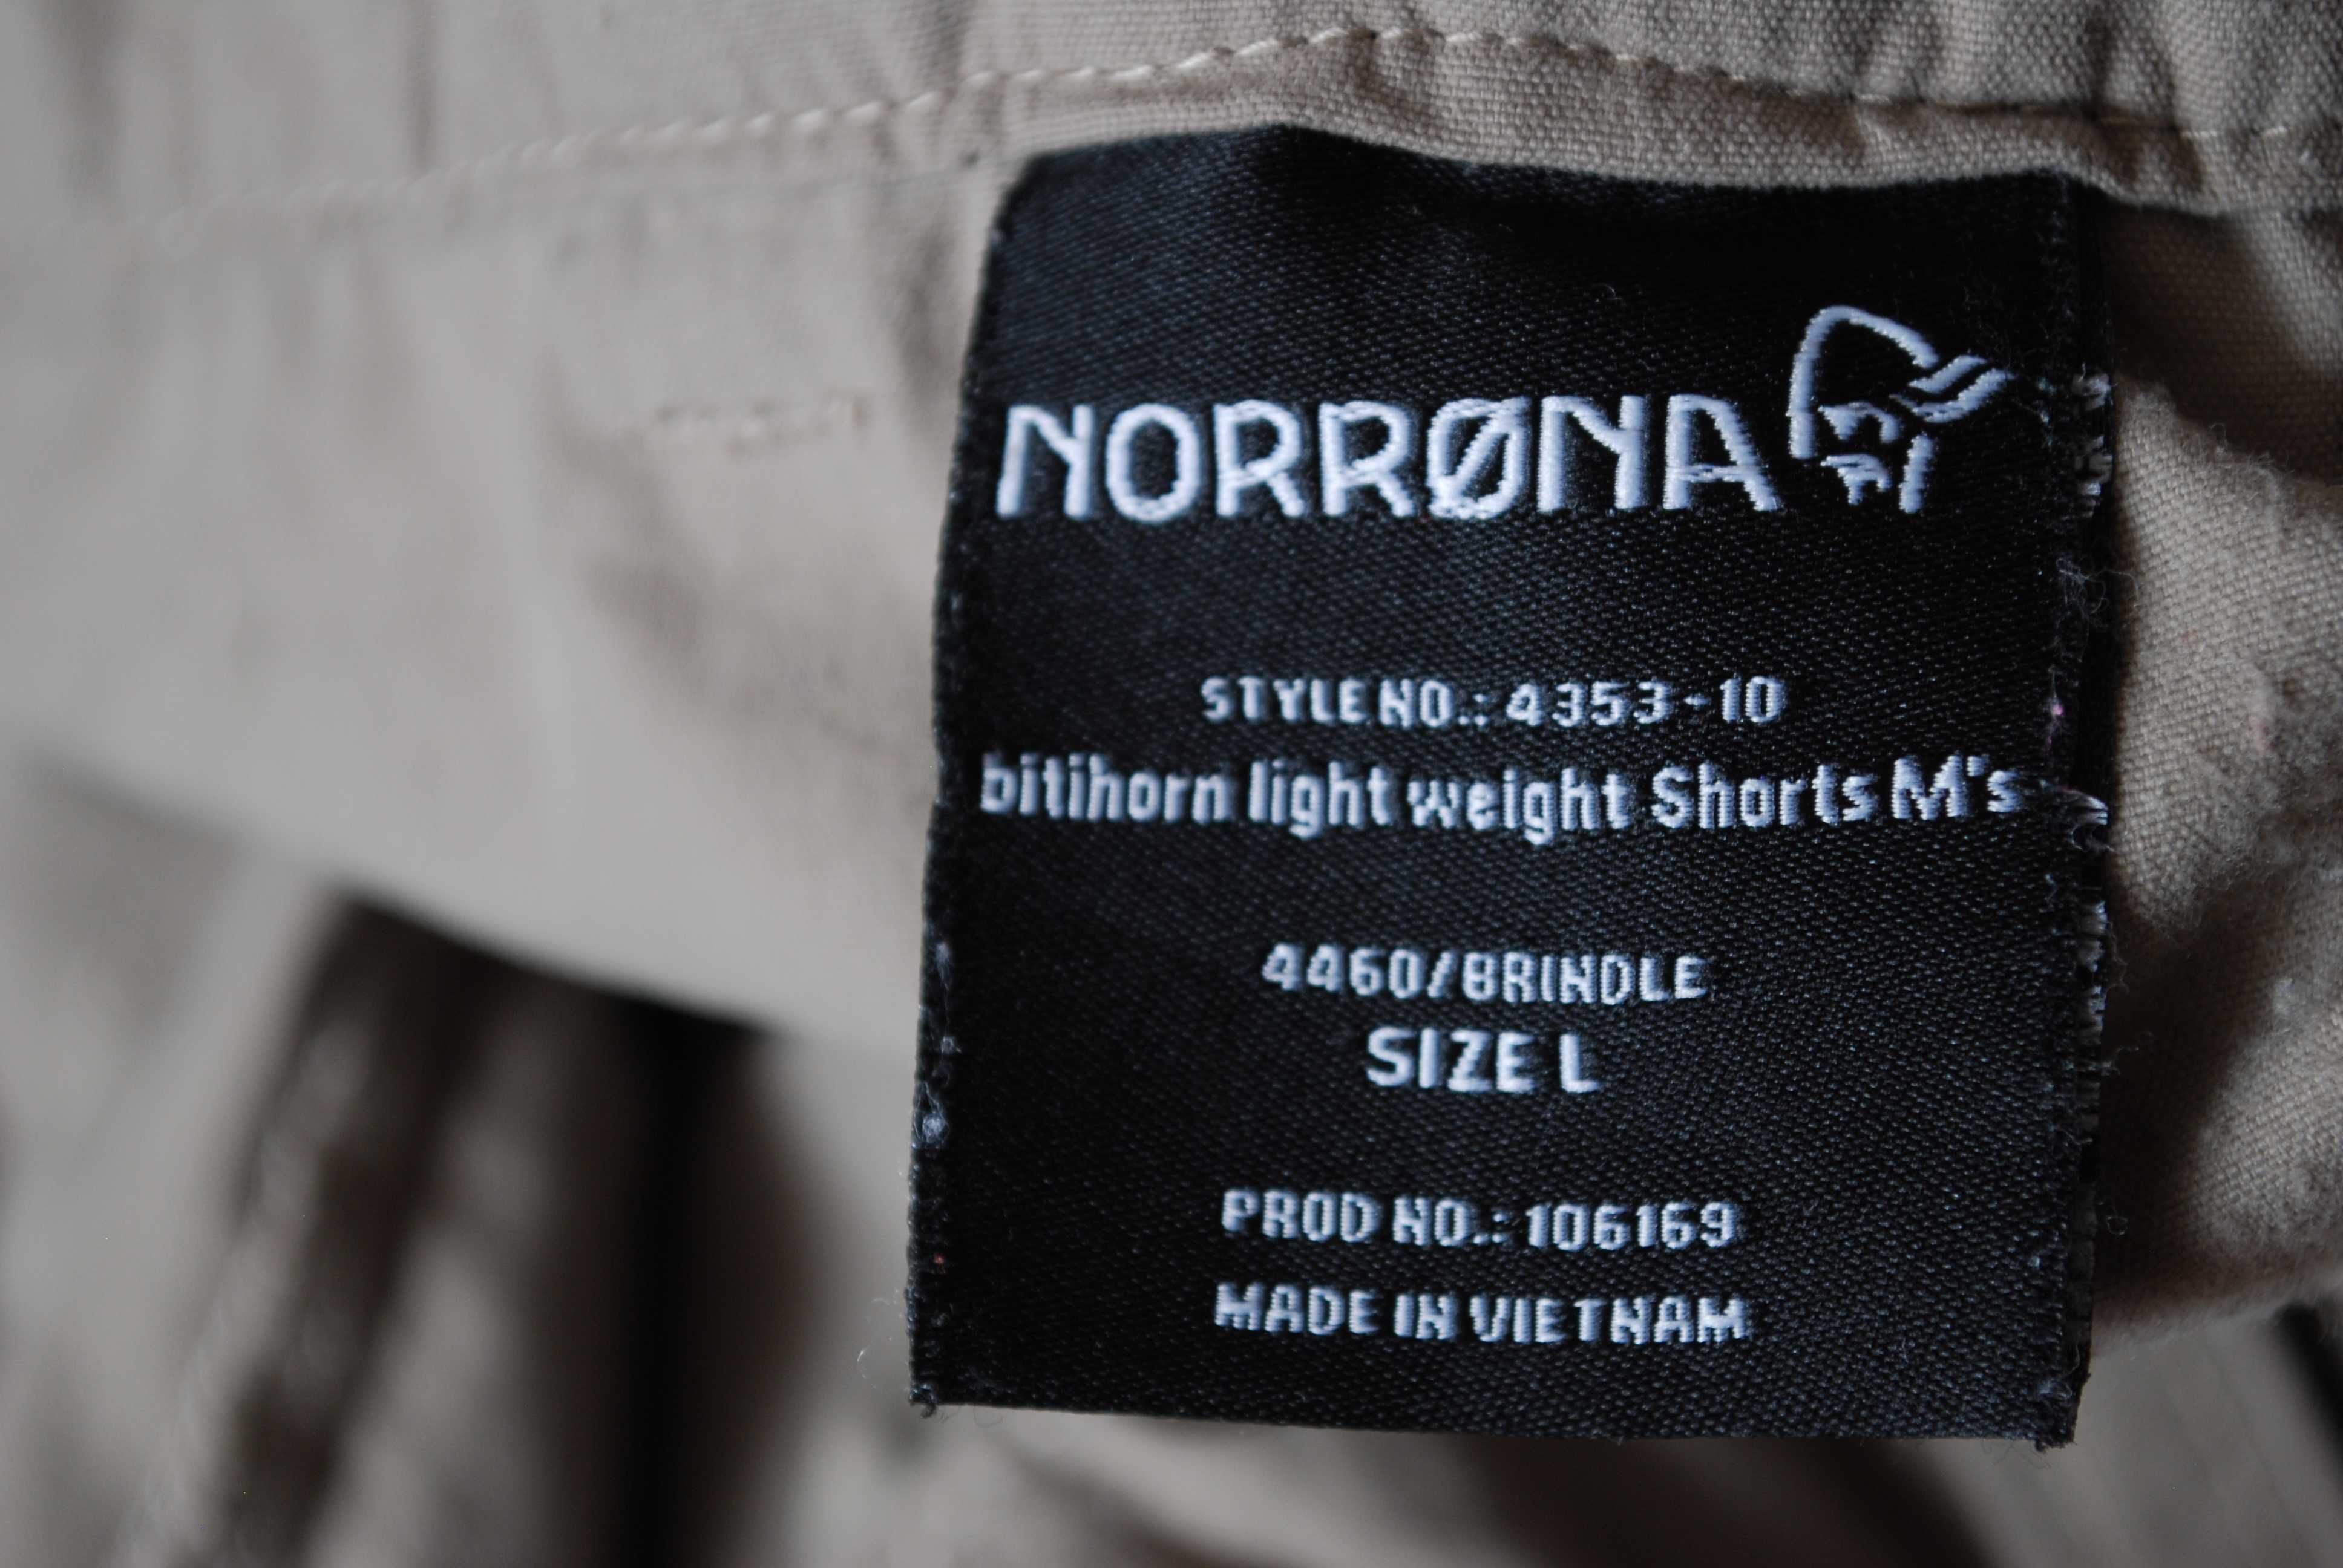 Norrona Fjora Hybrid bike панталон М технични трекинг fox байк